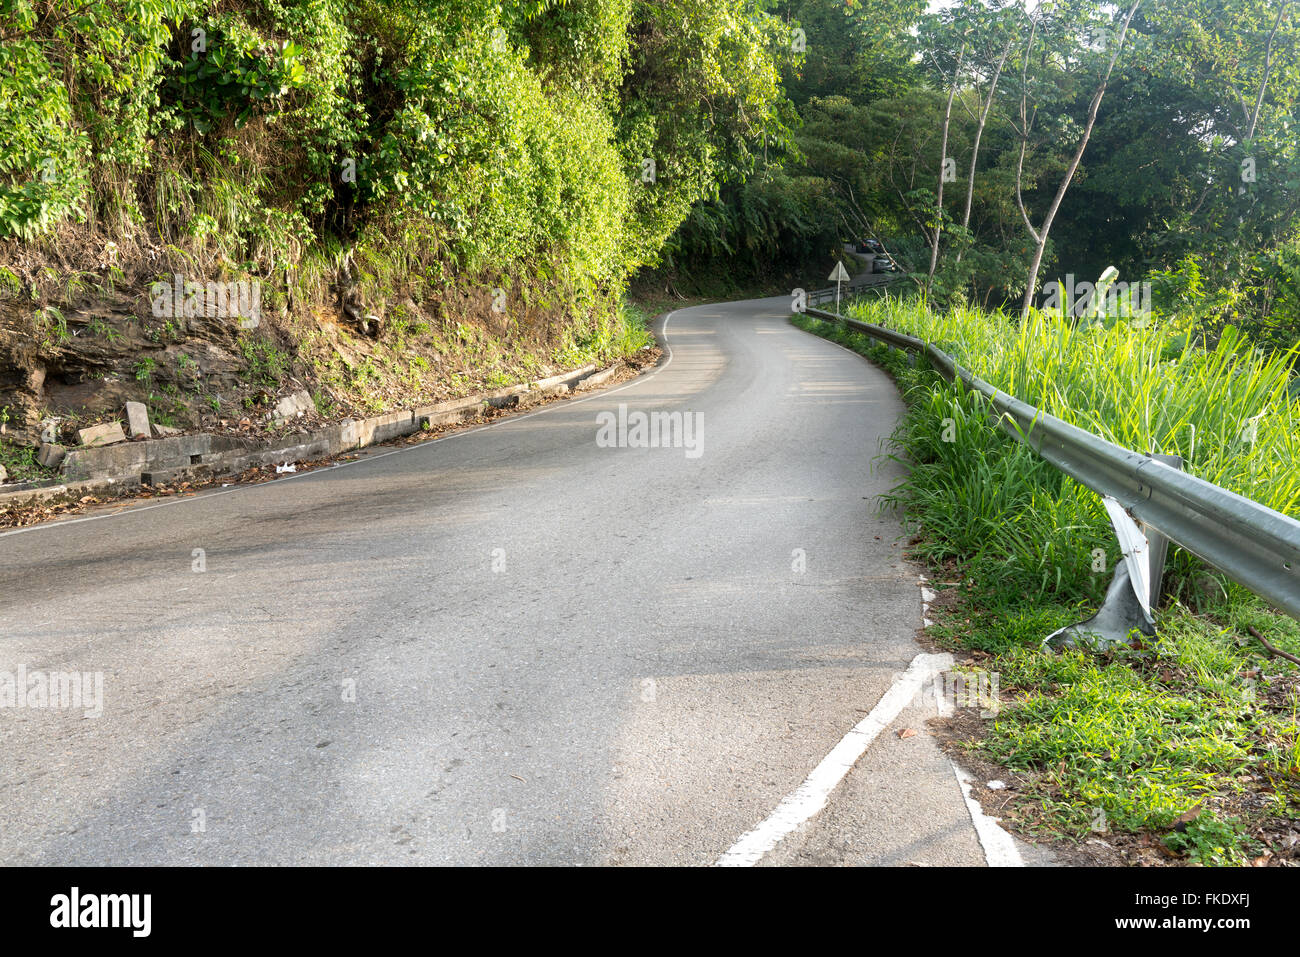 Road passing through forest, Trinidad, Trinidad And Tobago Stock Photo